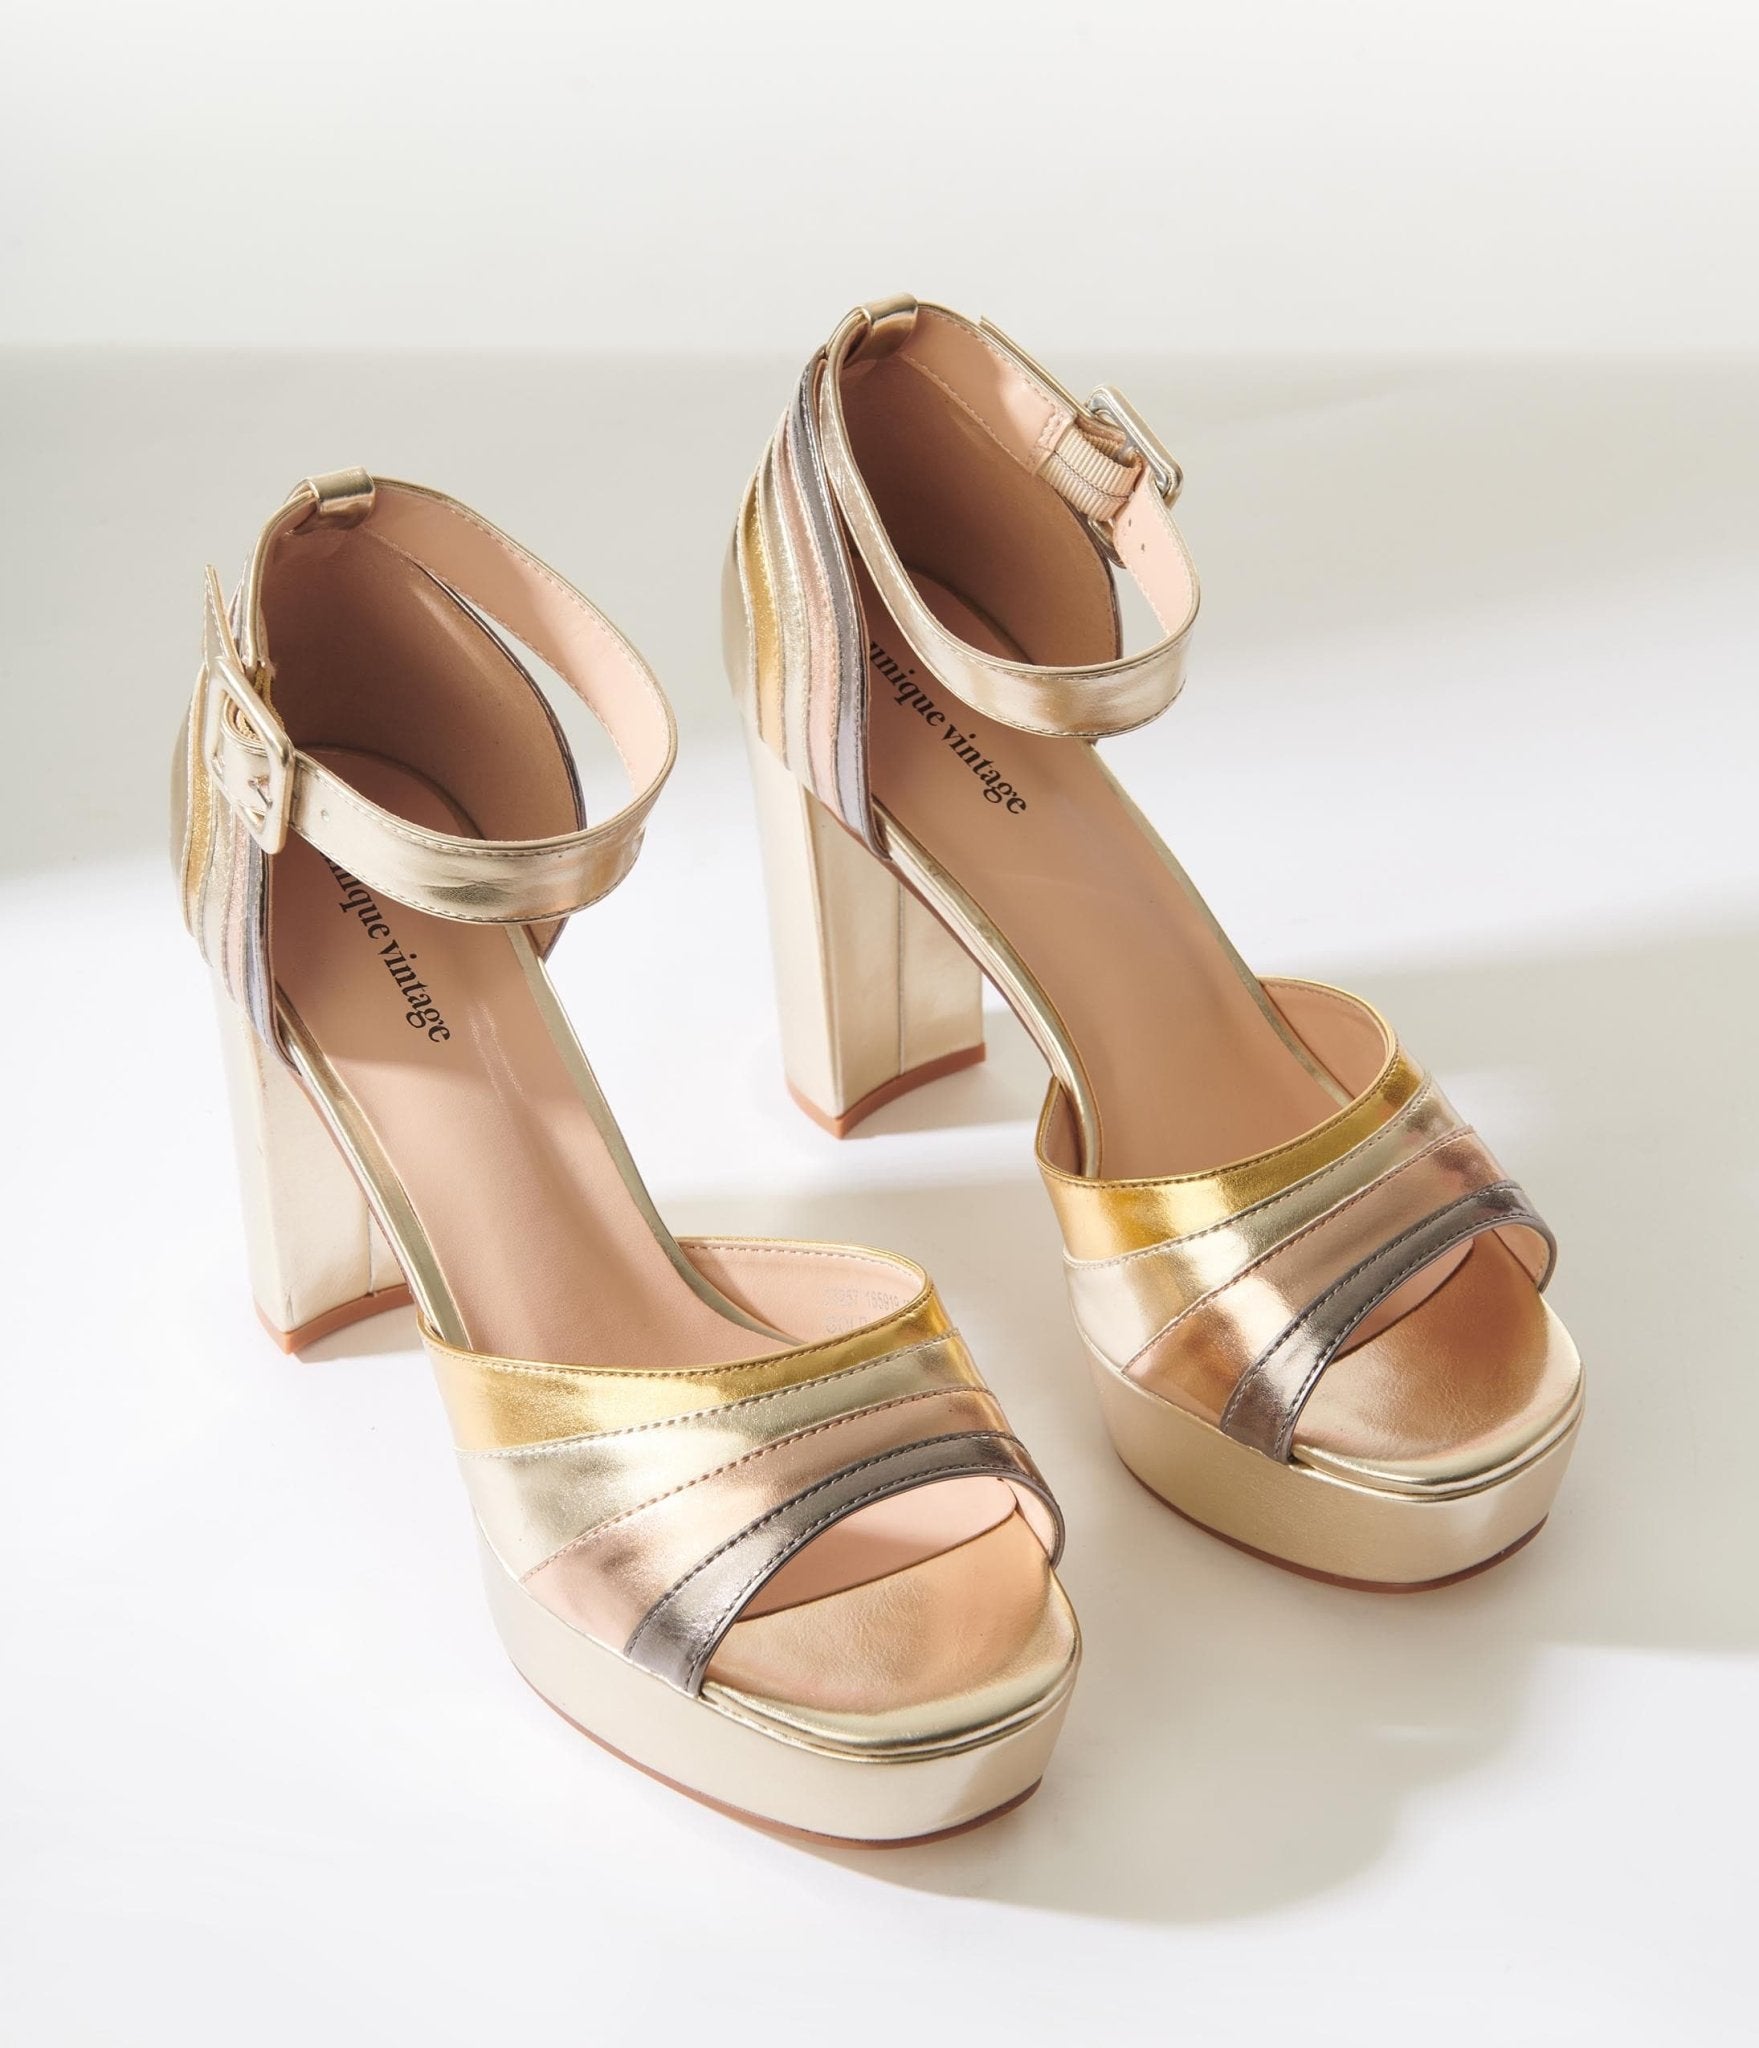 Gold Heels Sandal - Buy Gold Heels Sandal online in India